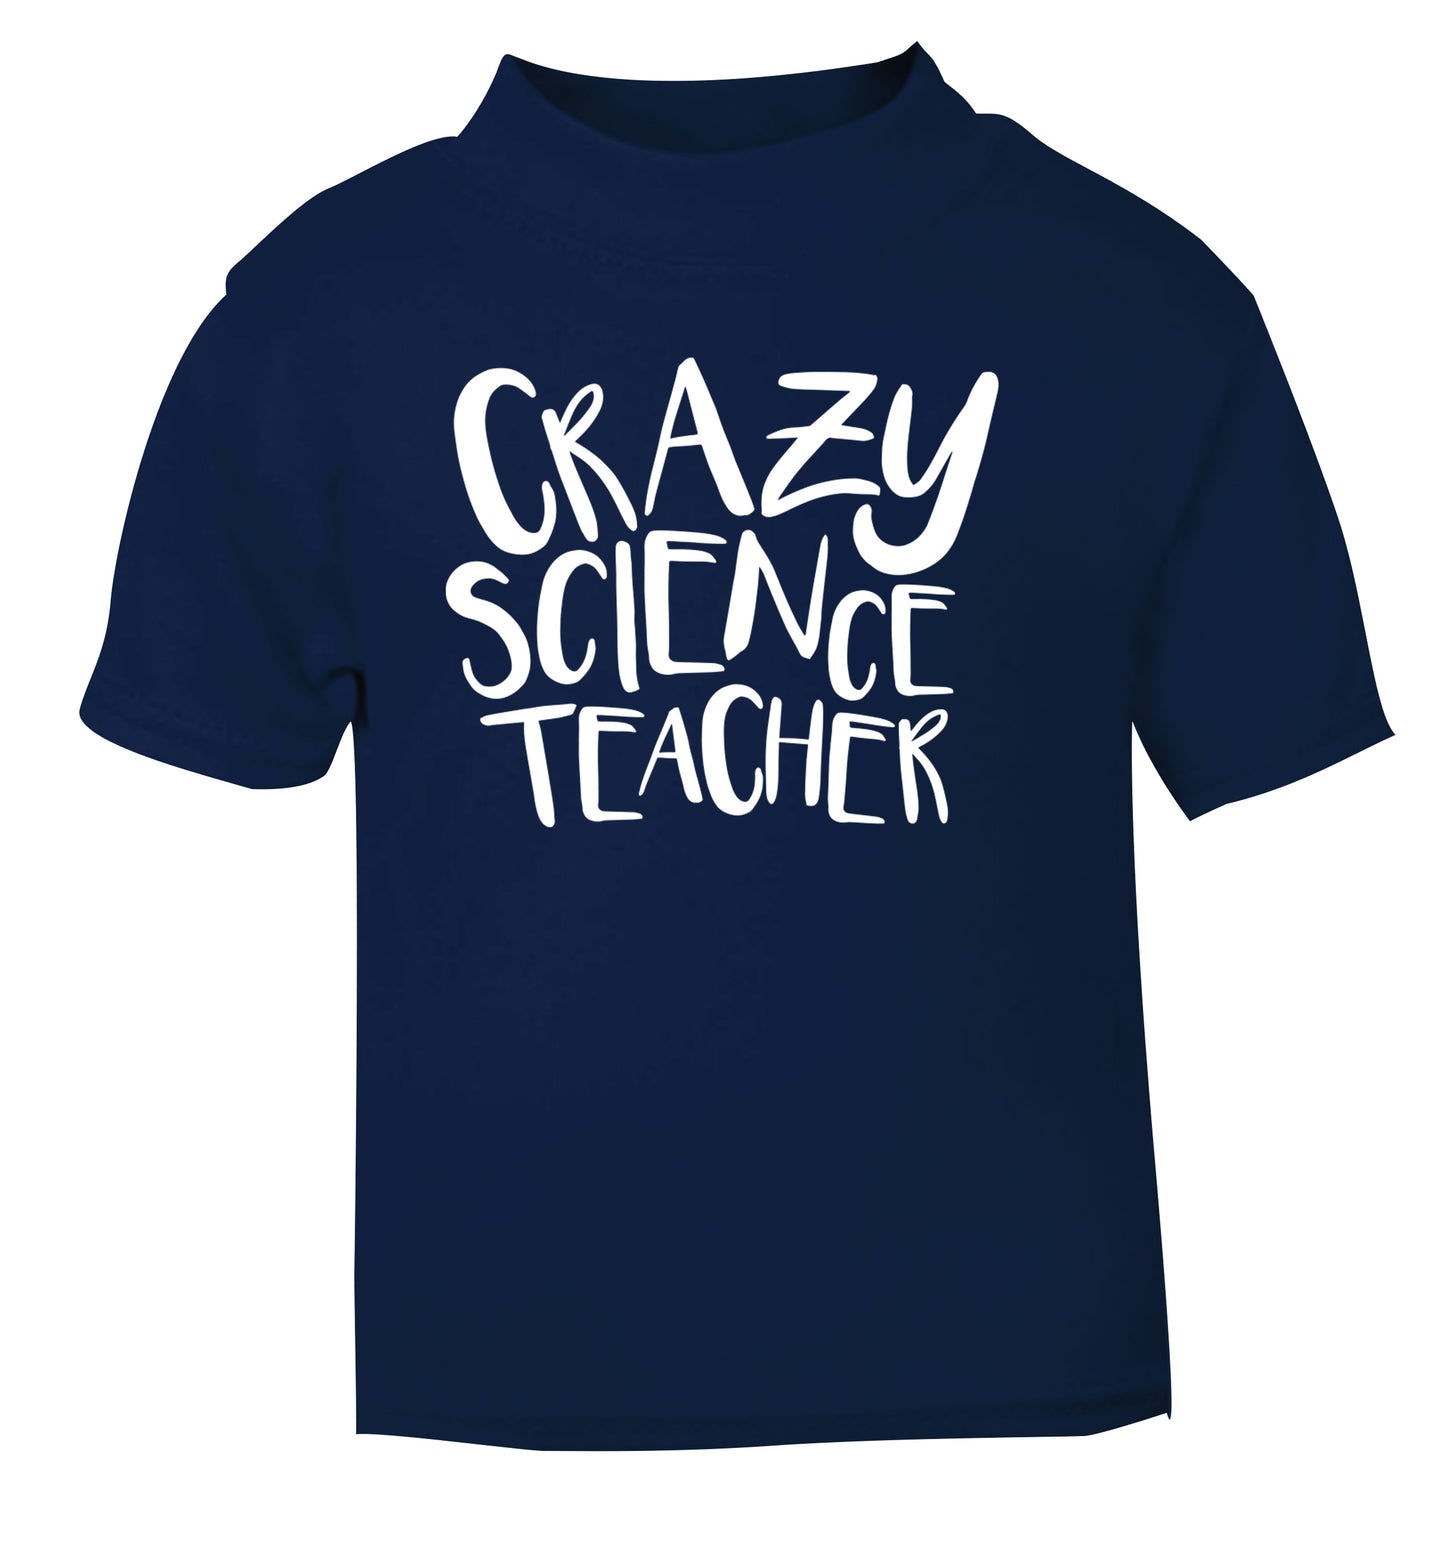 Crazy science teacher navy Baby Toddler Tshirt 2 Years